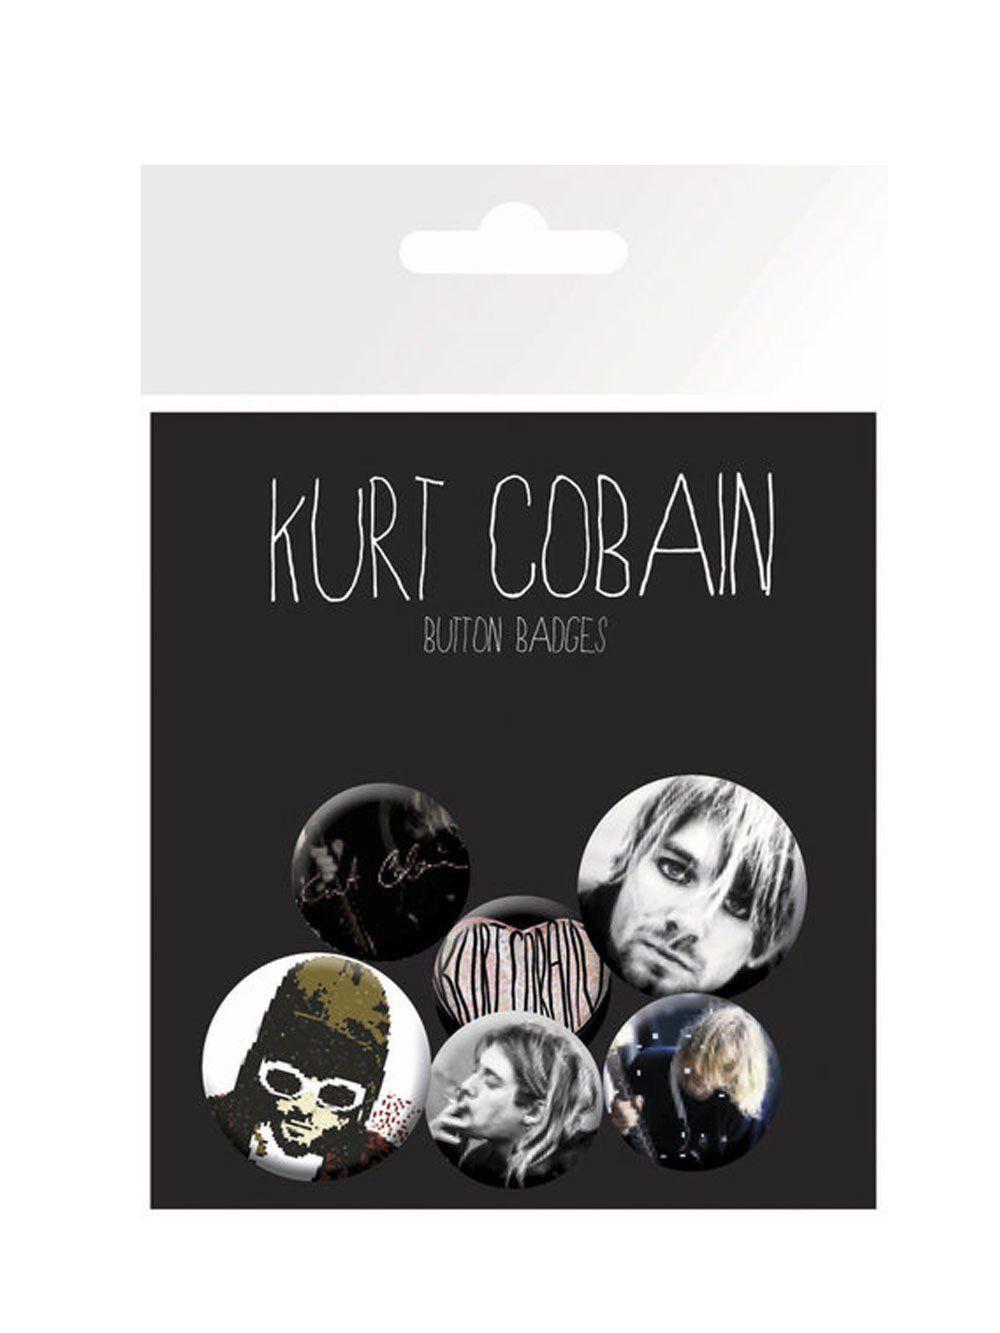 Kurt Cobain Logo - Buy Kurt Cobain - Logo Badge Pack at Loudshop.com for only £2.75